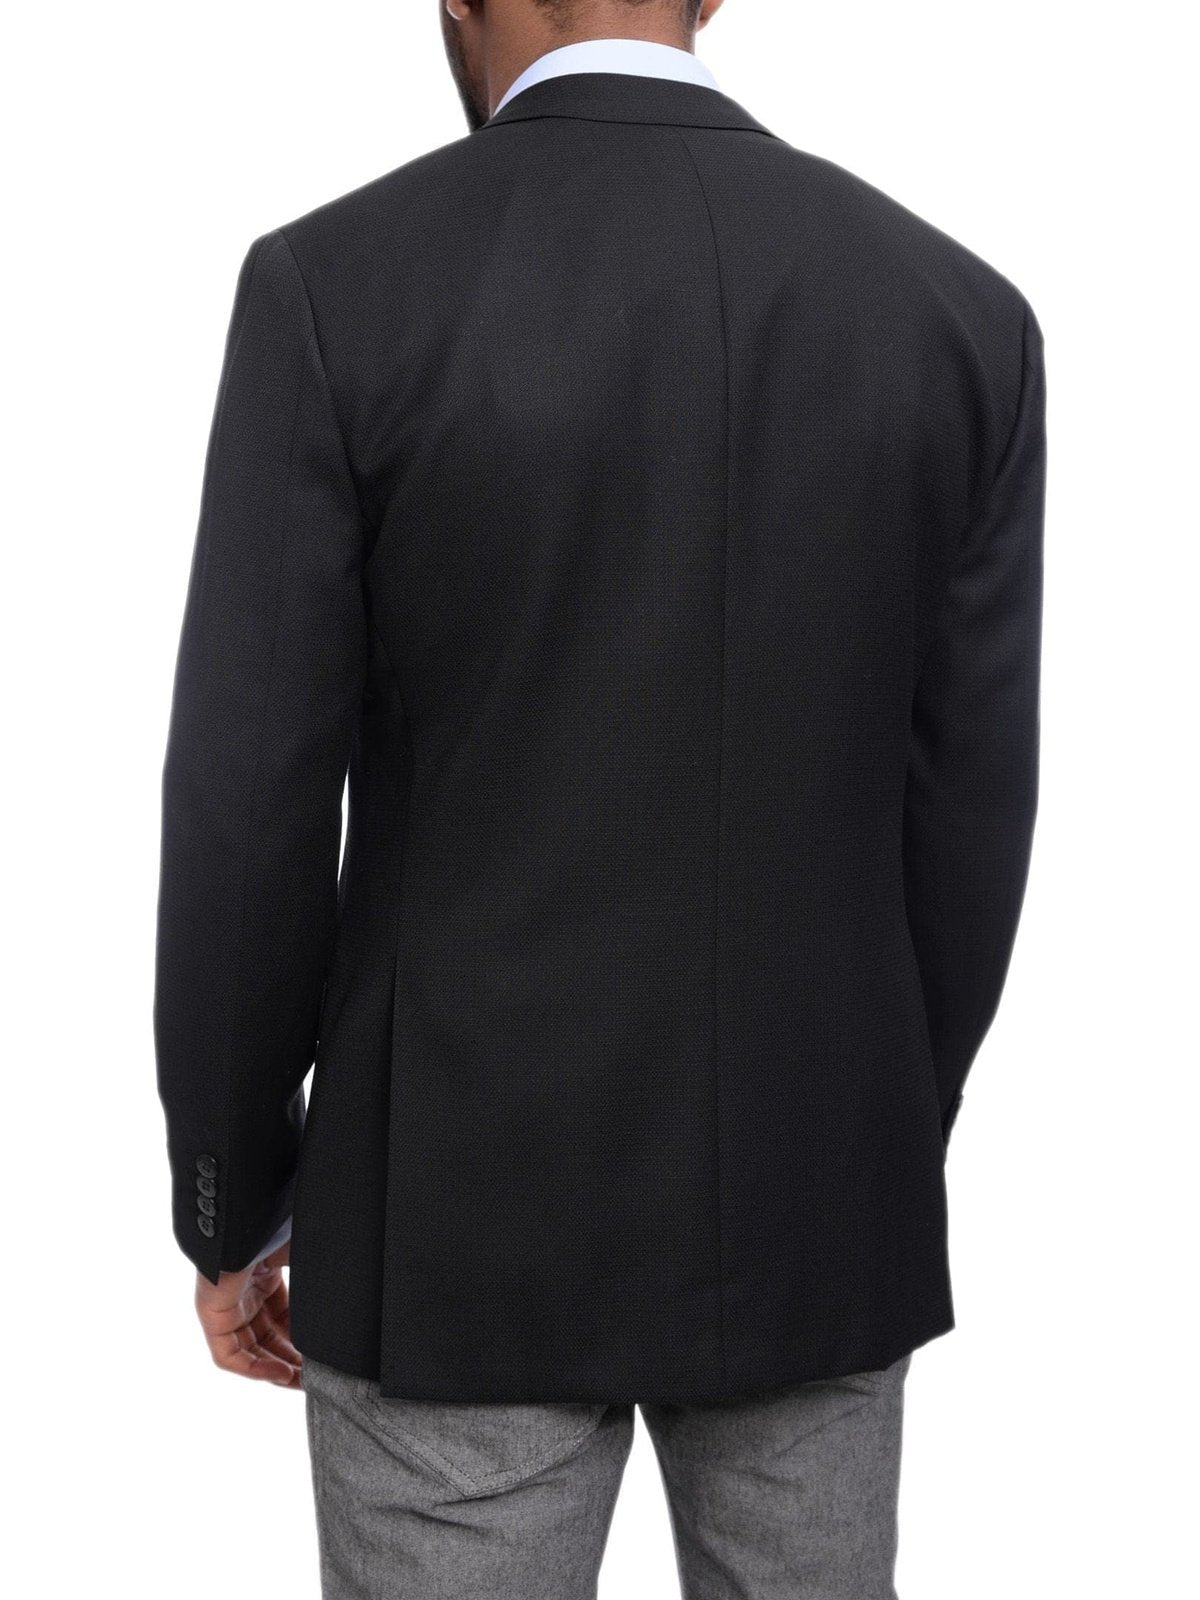 Napoli BLAZERS Napoli Slim Fit Black Textured Two Button Half Canvassed Wool Blazer Sportcoat